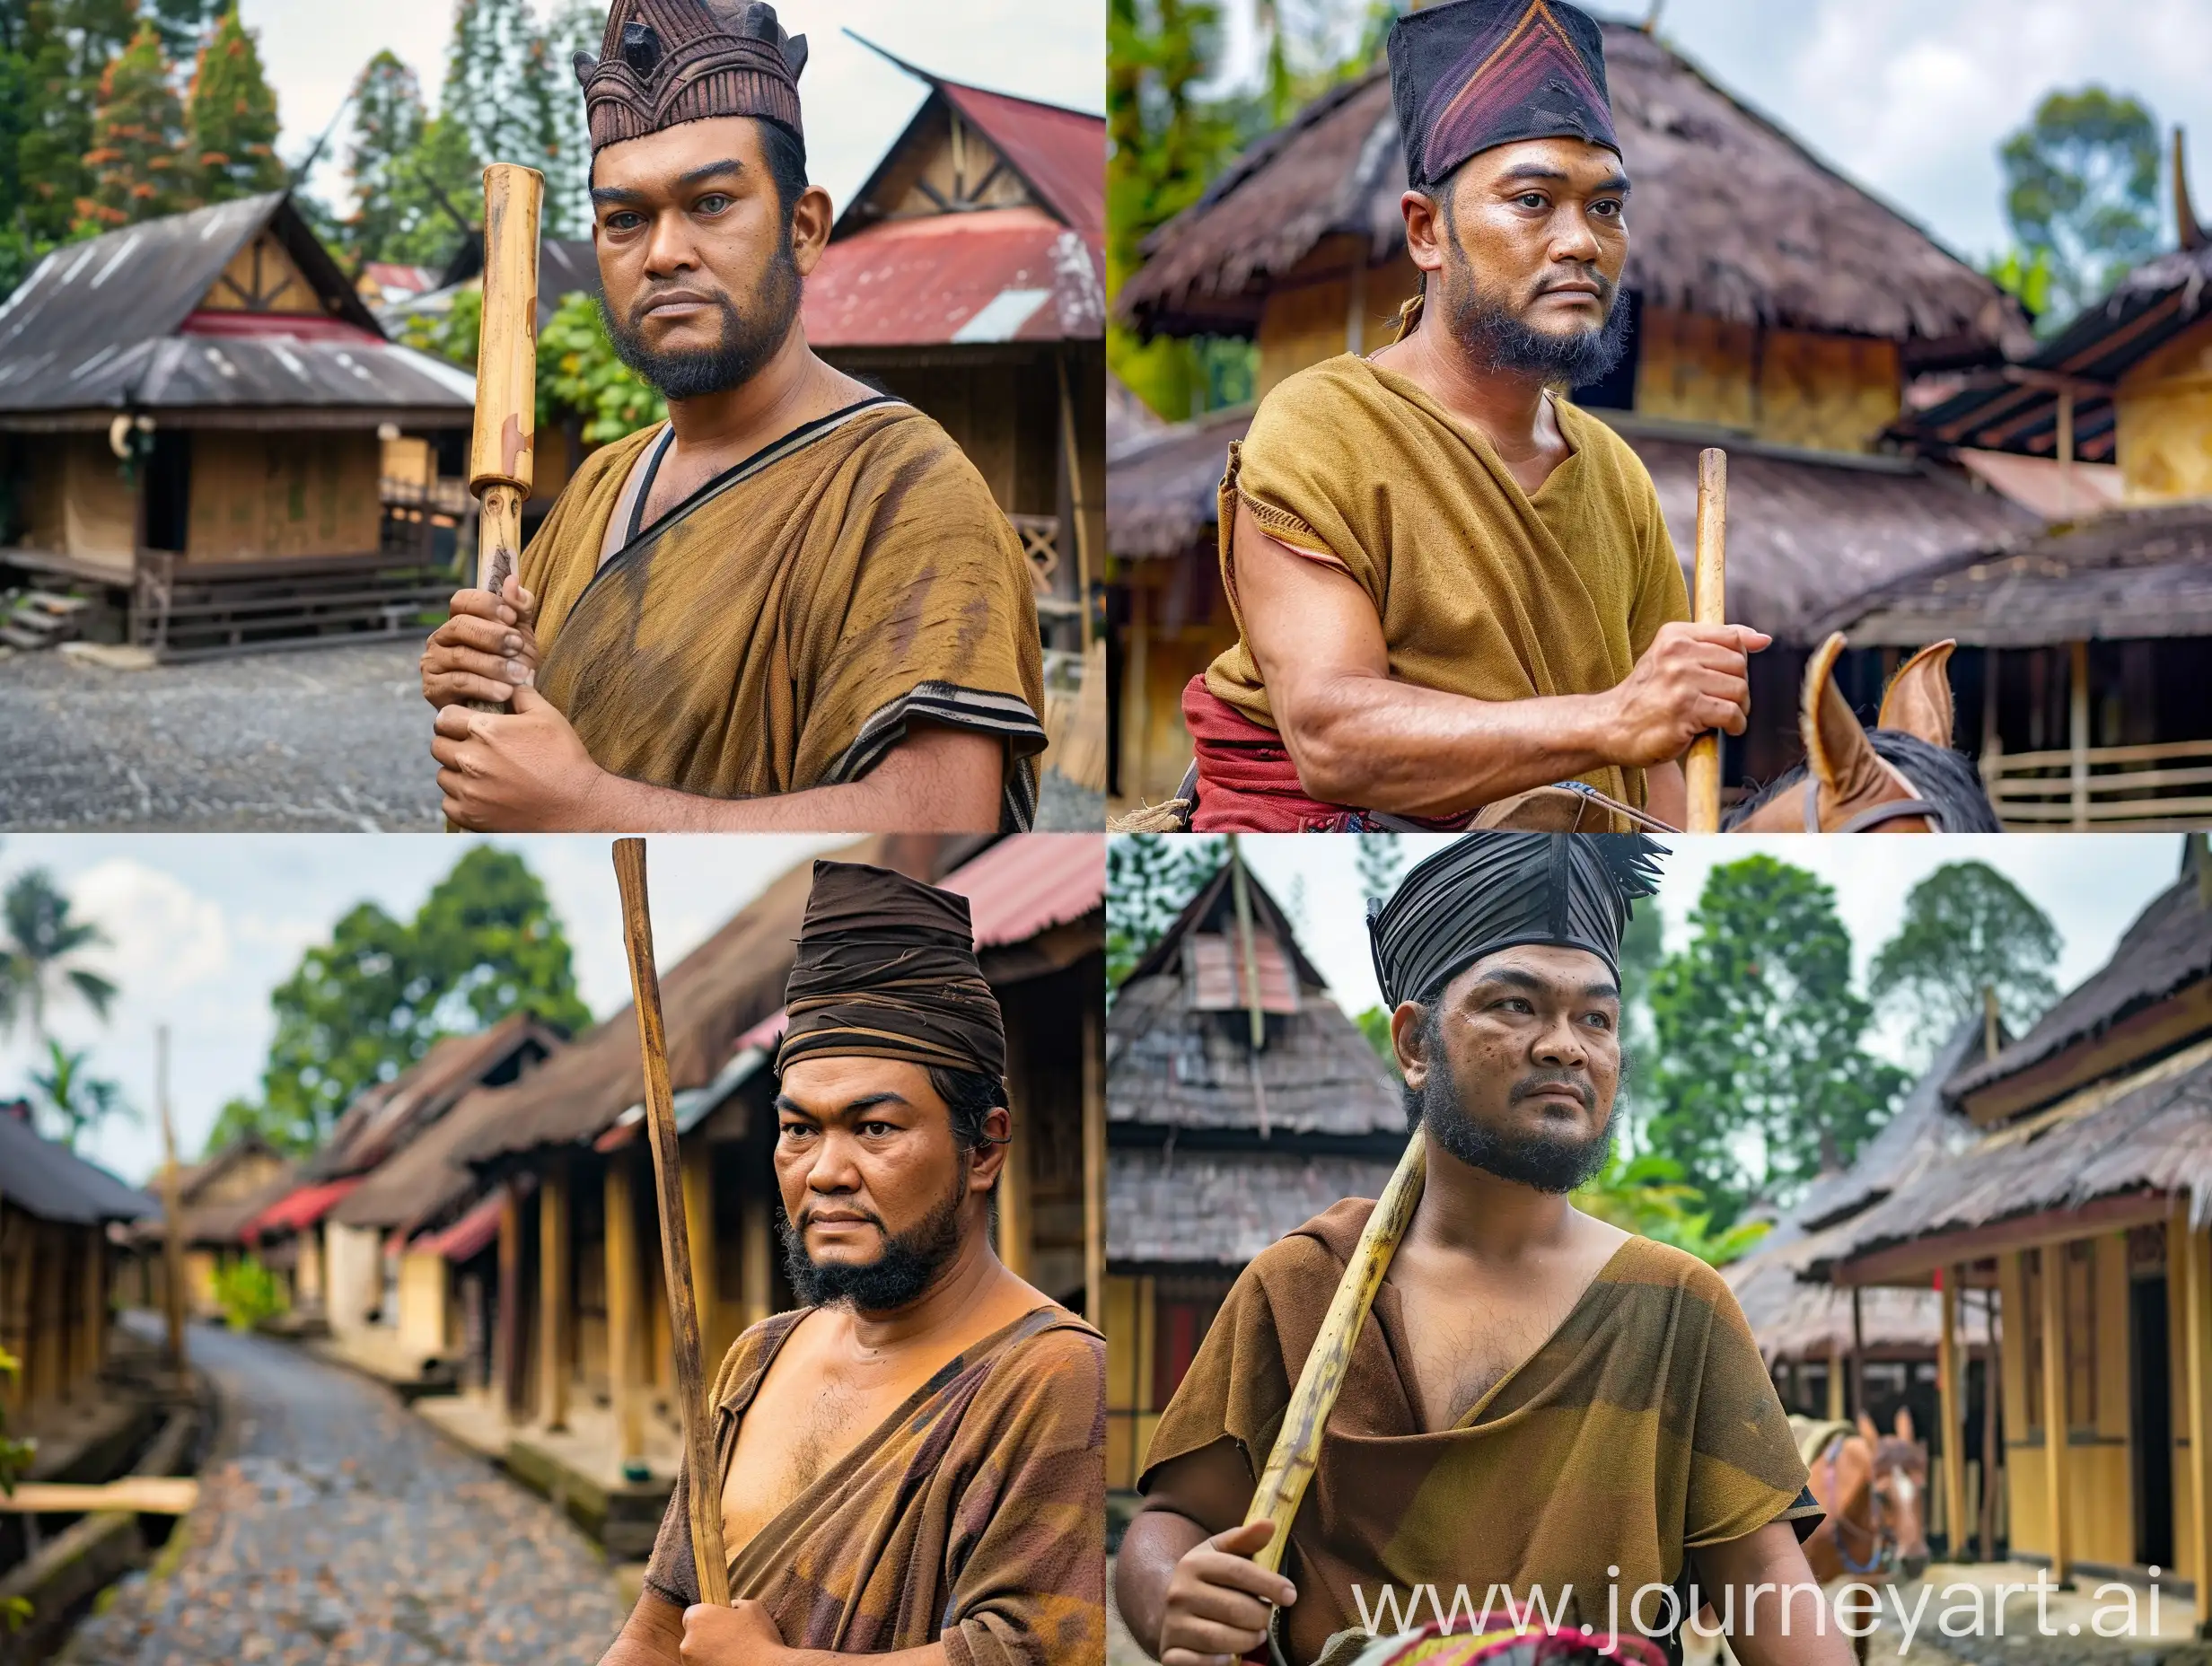 Sisingamangaraja, holding a wooden stick, rode around the village of traditional Batak houses